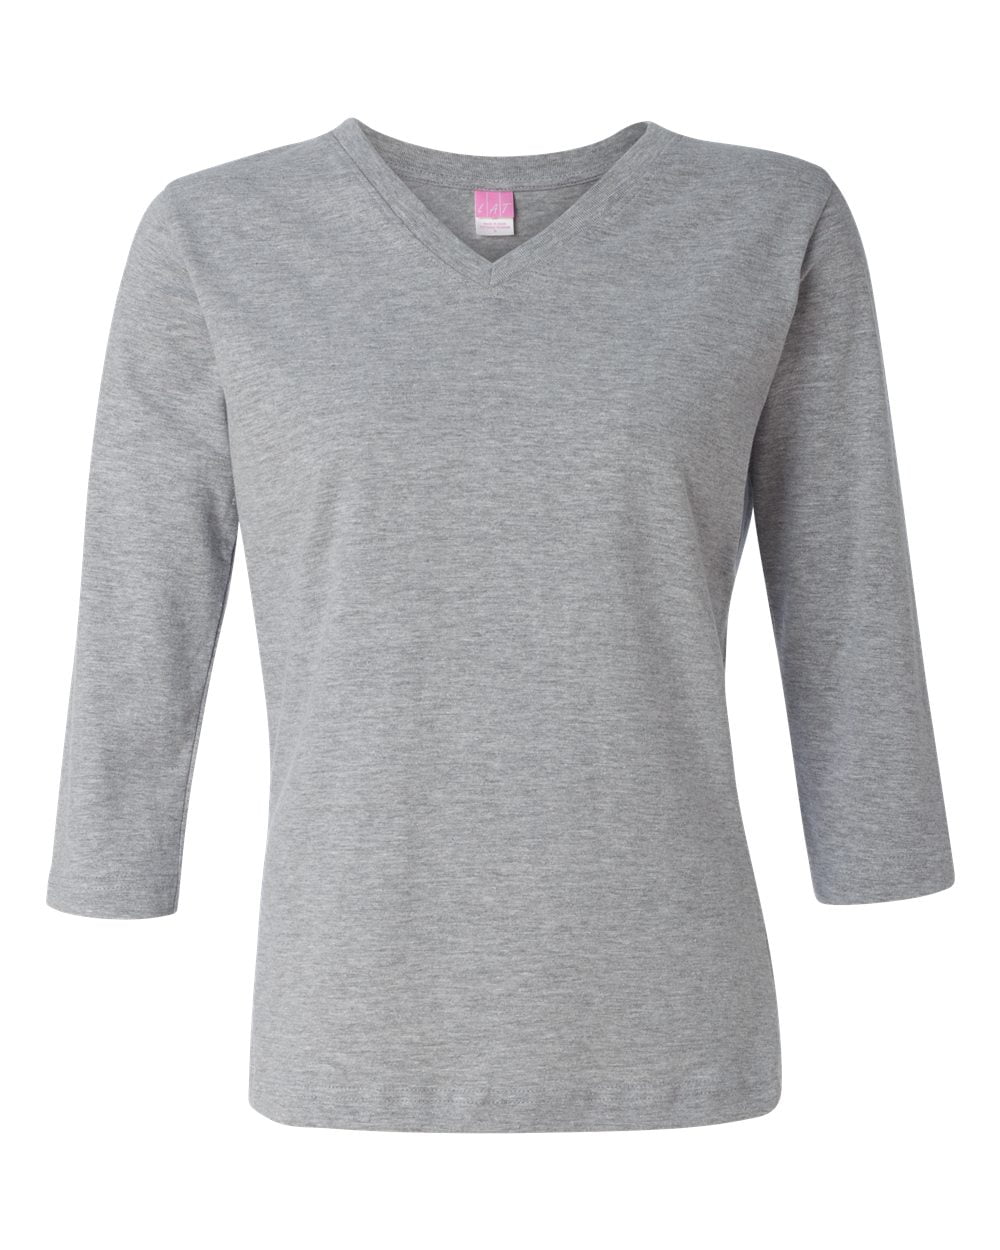 Buy odeeps Women''s 3/4 Sleeve Thermal Top and Bottom Set (Grey, X